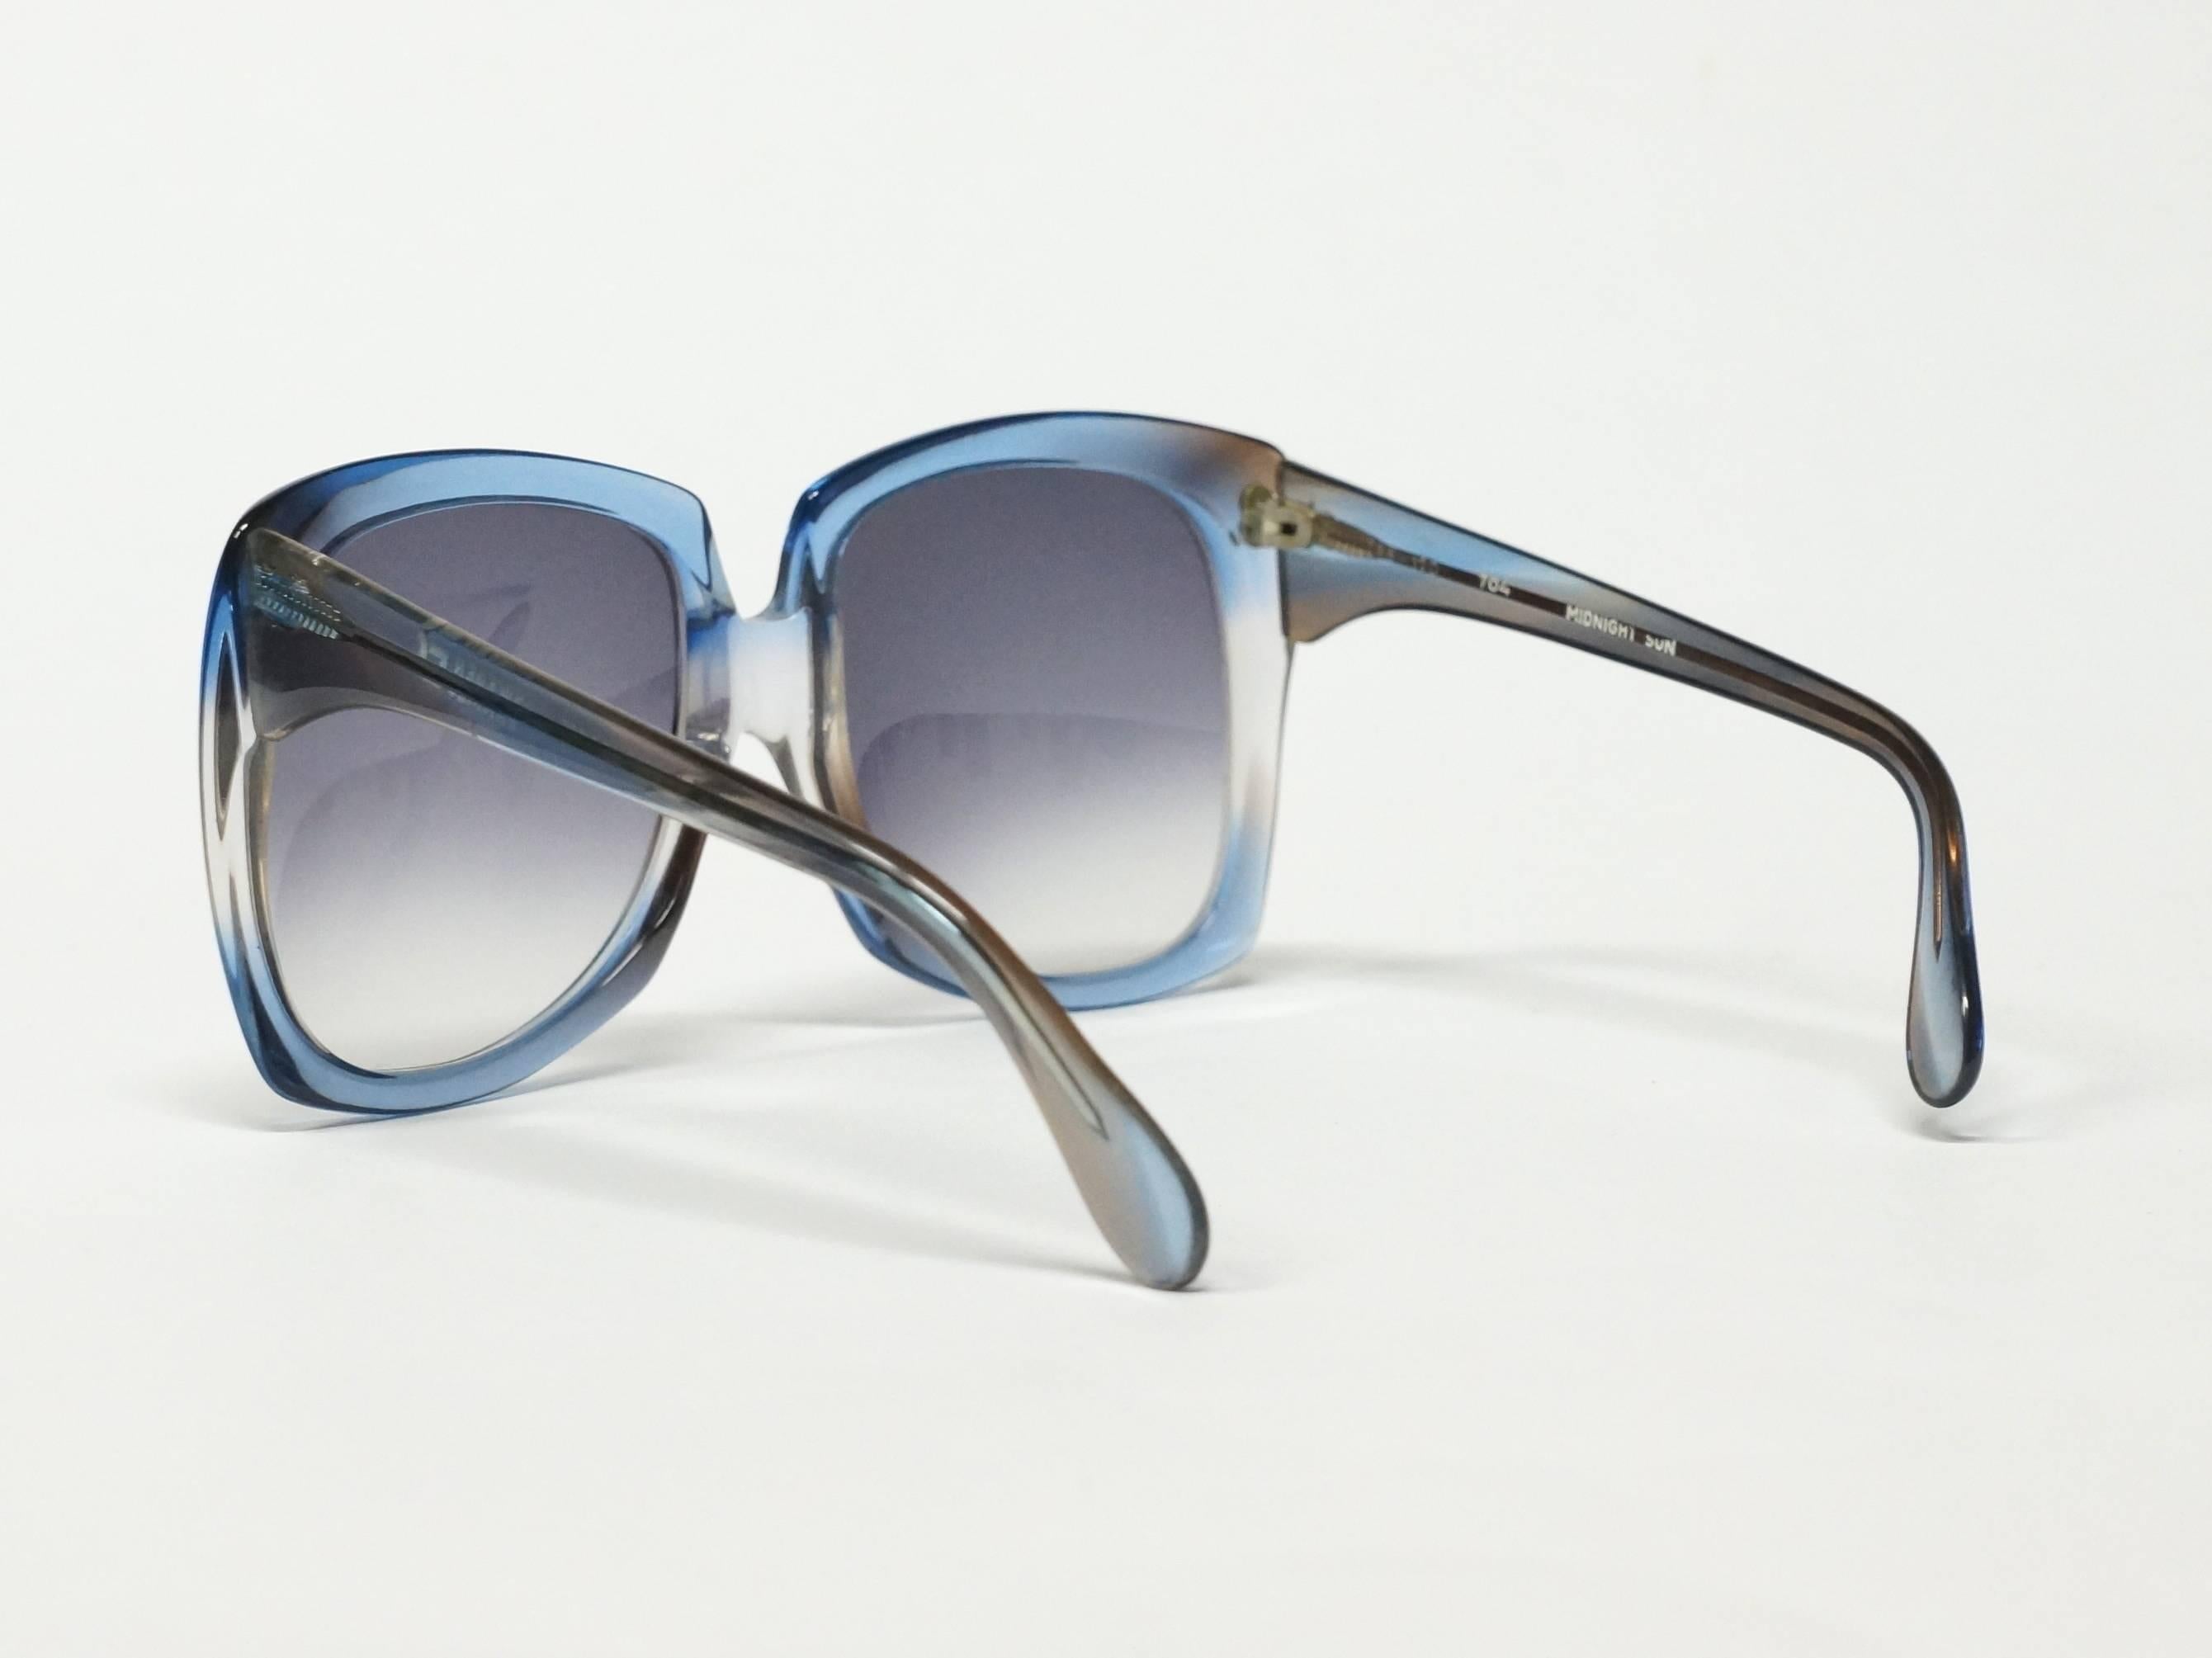 Gray 1970s Super Oversized Vintage Sunglasses by Sweden Frames model Midnight Sun For Sale